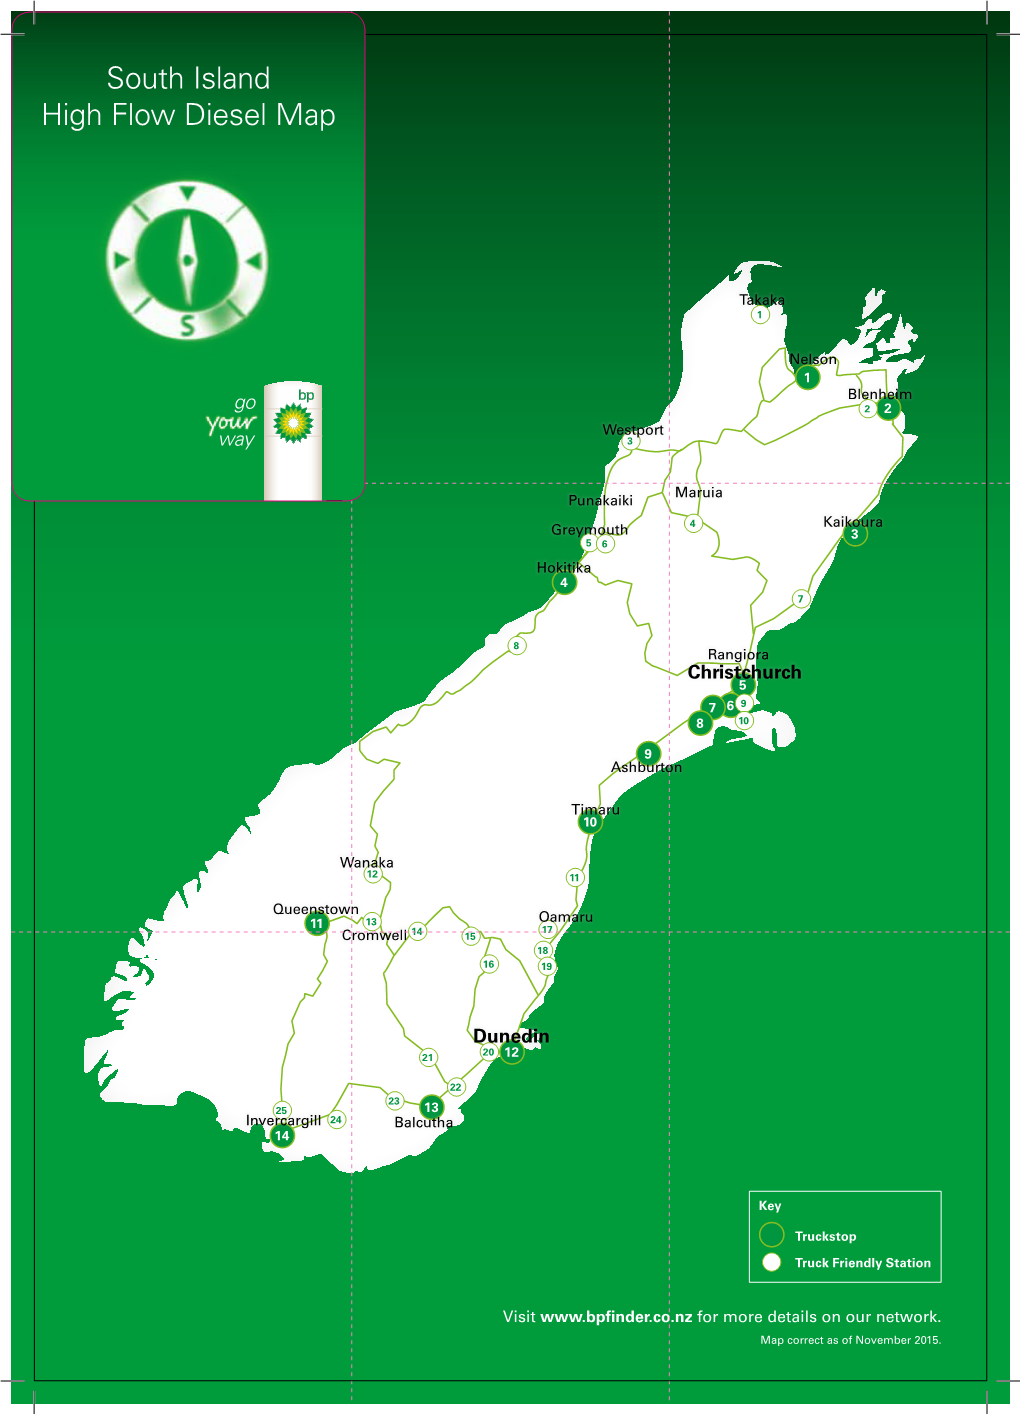 South Island High Flow Diesel Map